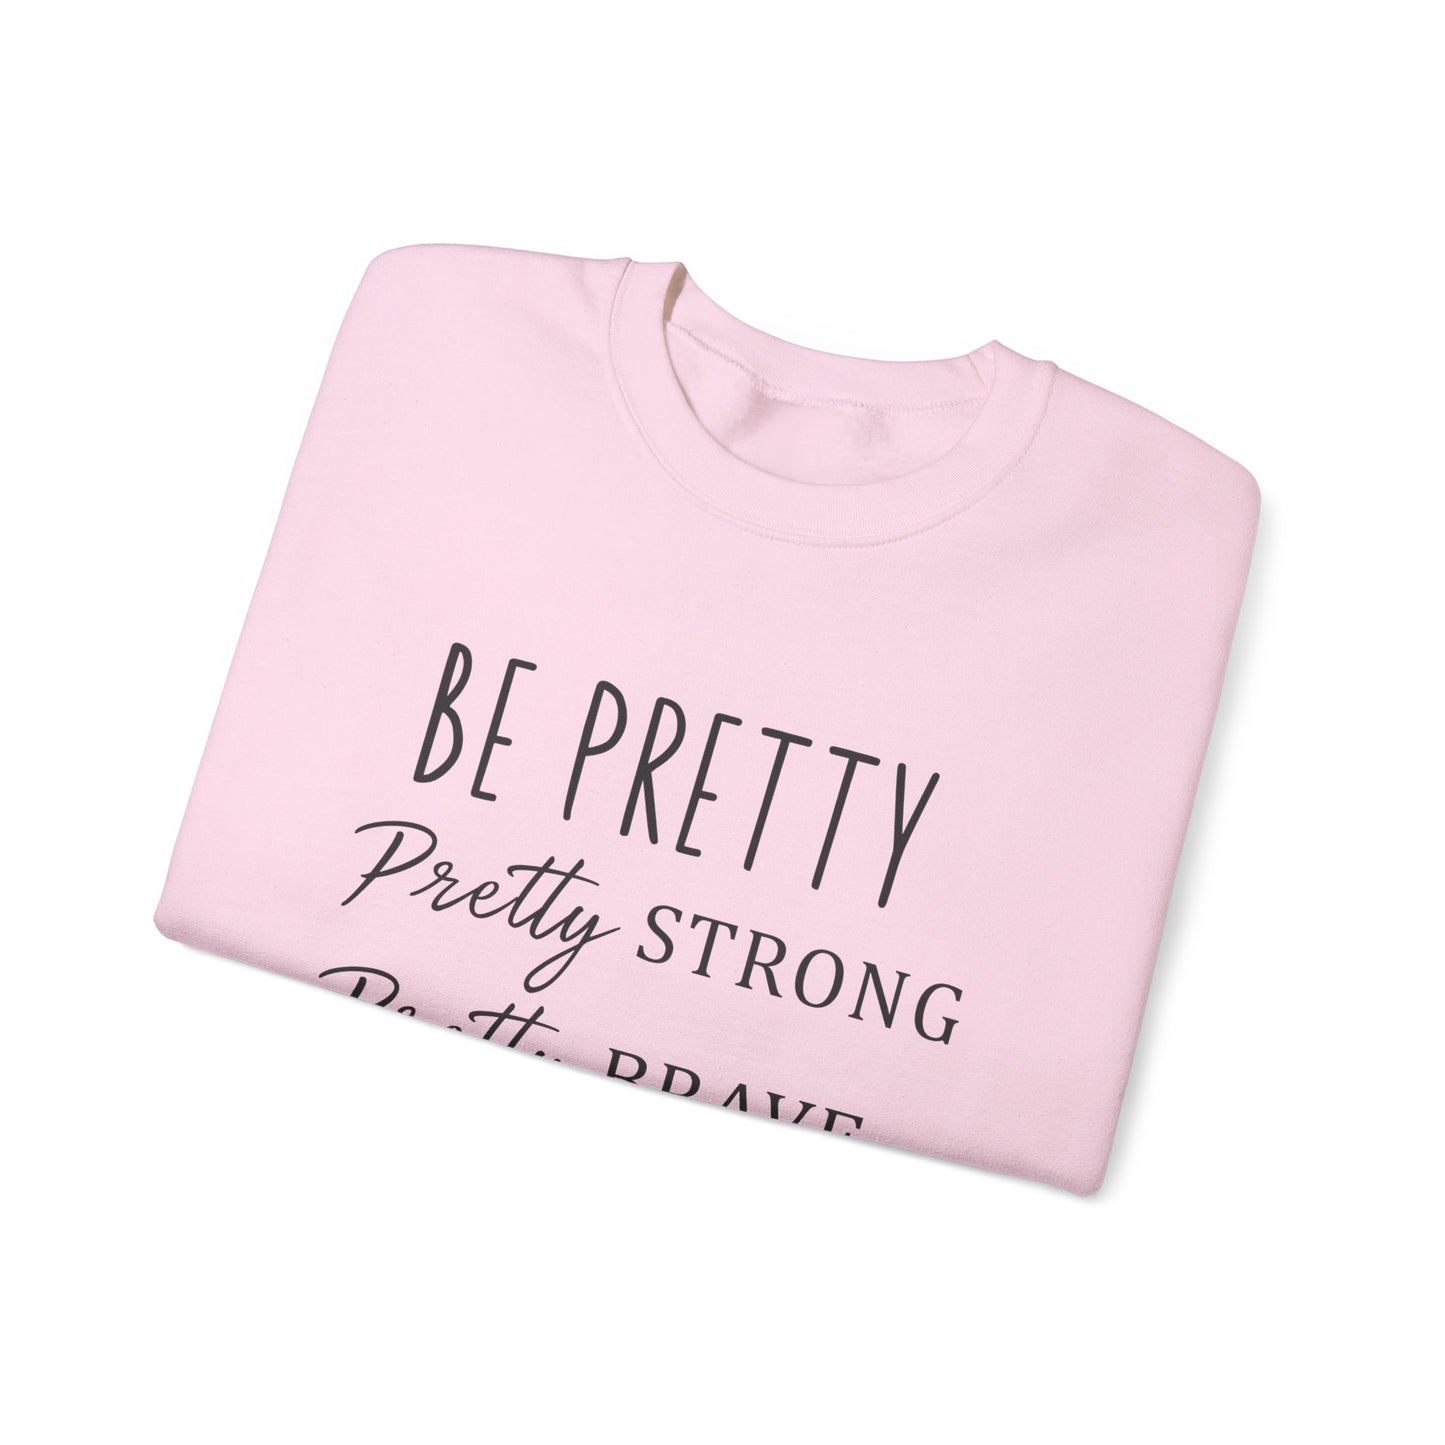 Be Pretty Strong Brave Kind Women's Sweatshirt